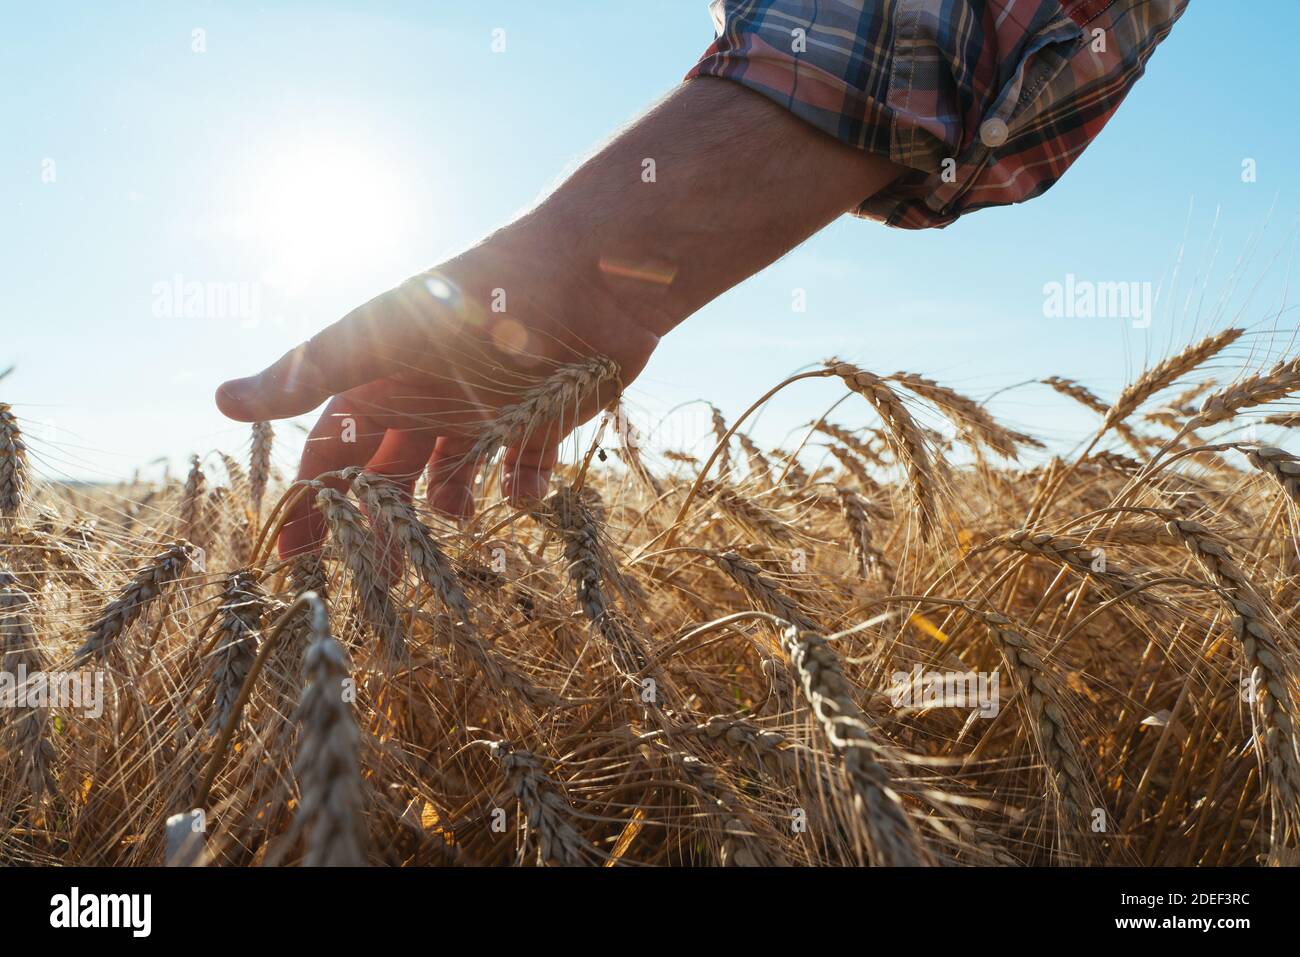 Wheat sprouts in a farmer's hand.Farmer Walking Through Field Checking Wheat Crop Stock Photo